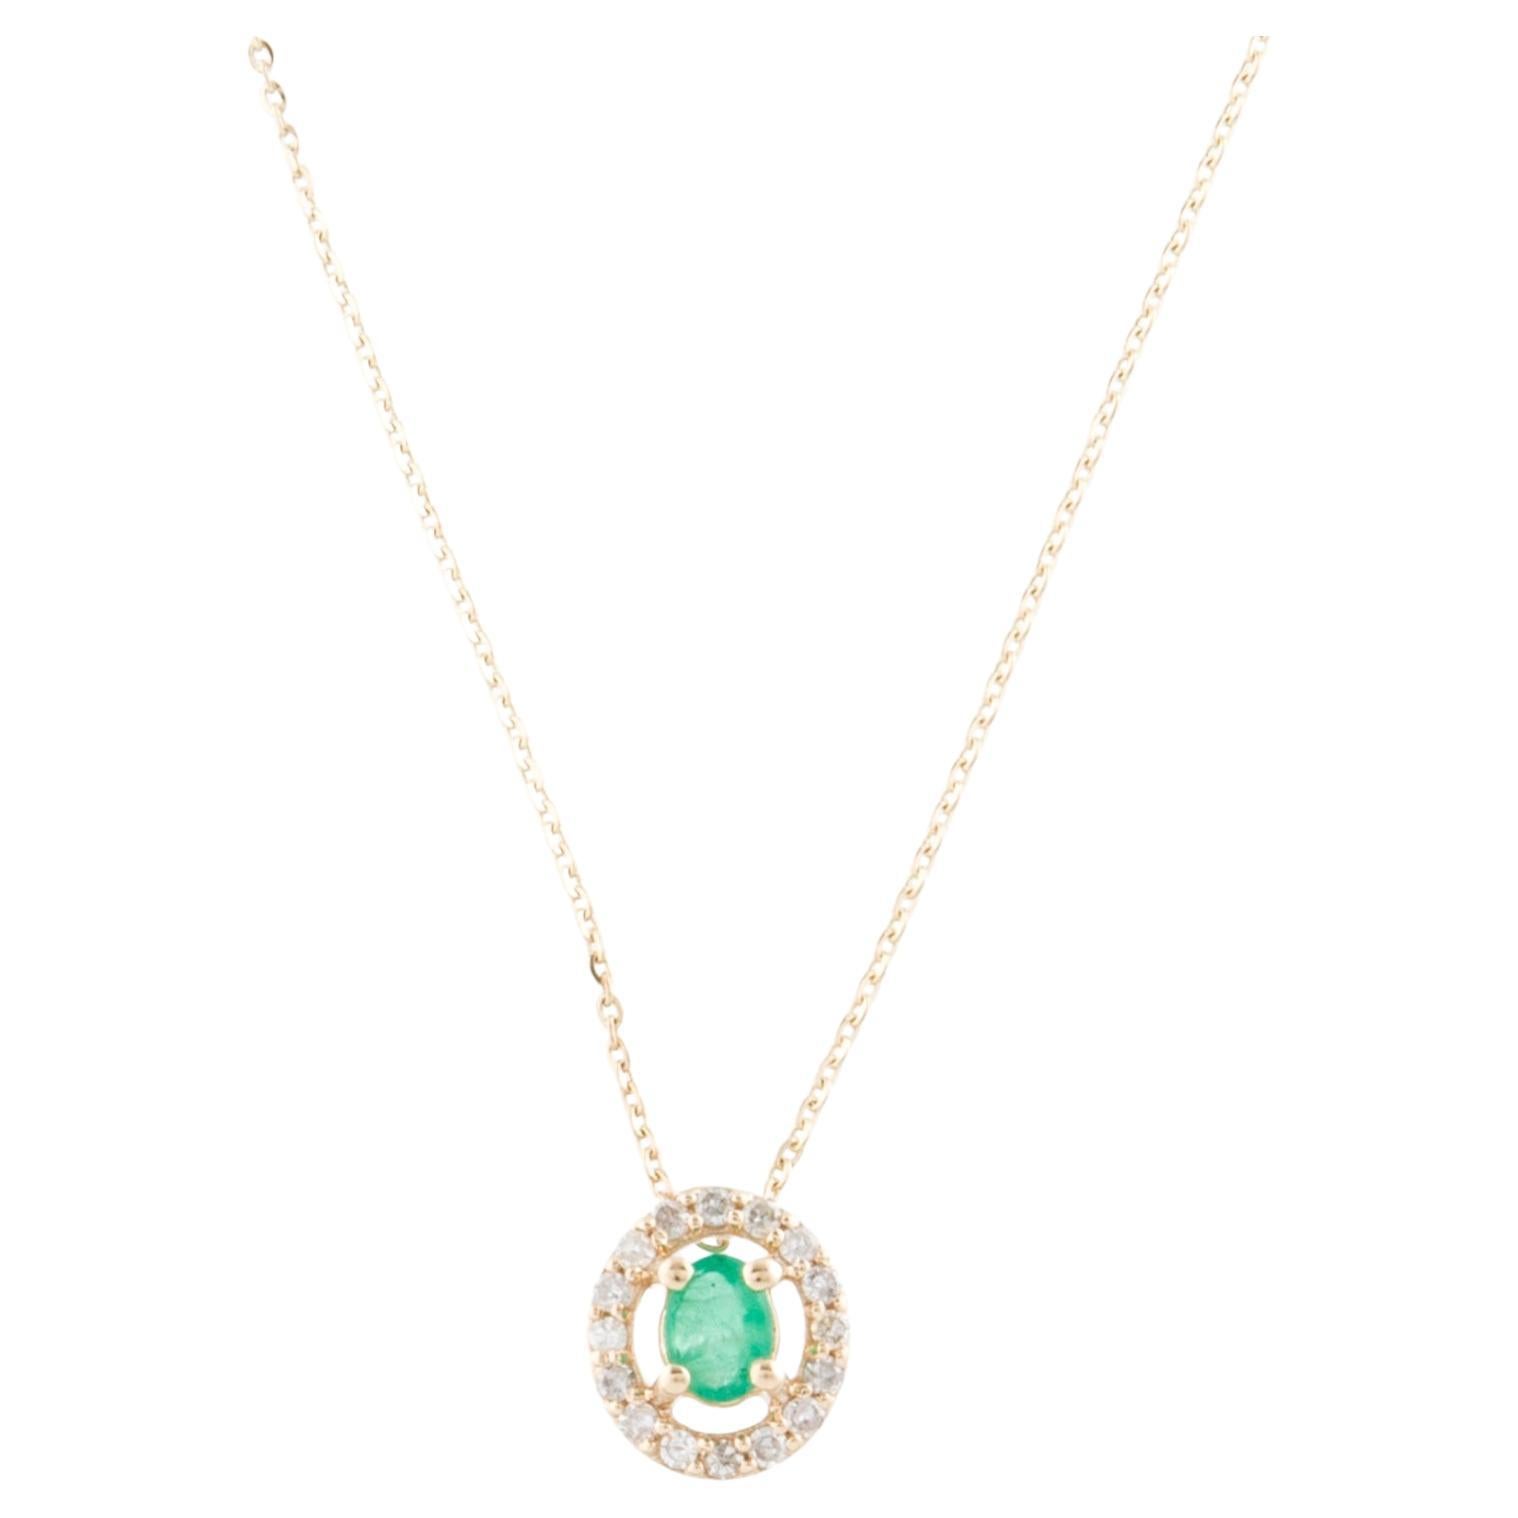 14K Emerald & Diamond Pendant Necklace: Exquisite Luxury Statement Jewelry Piece